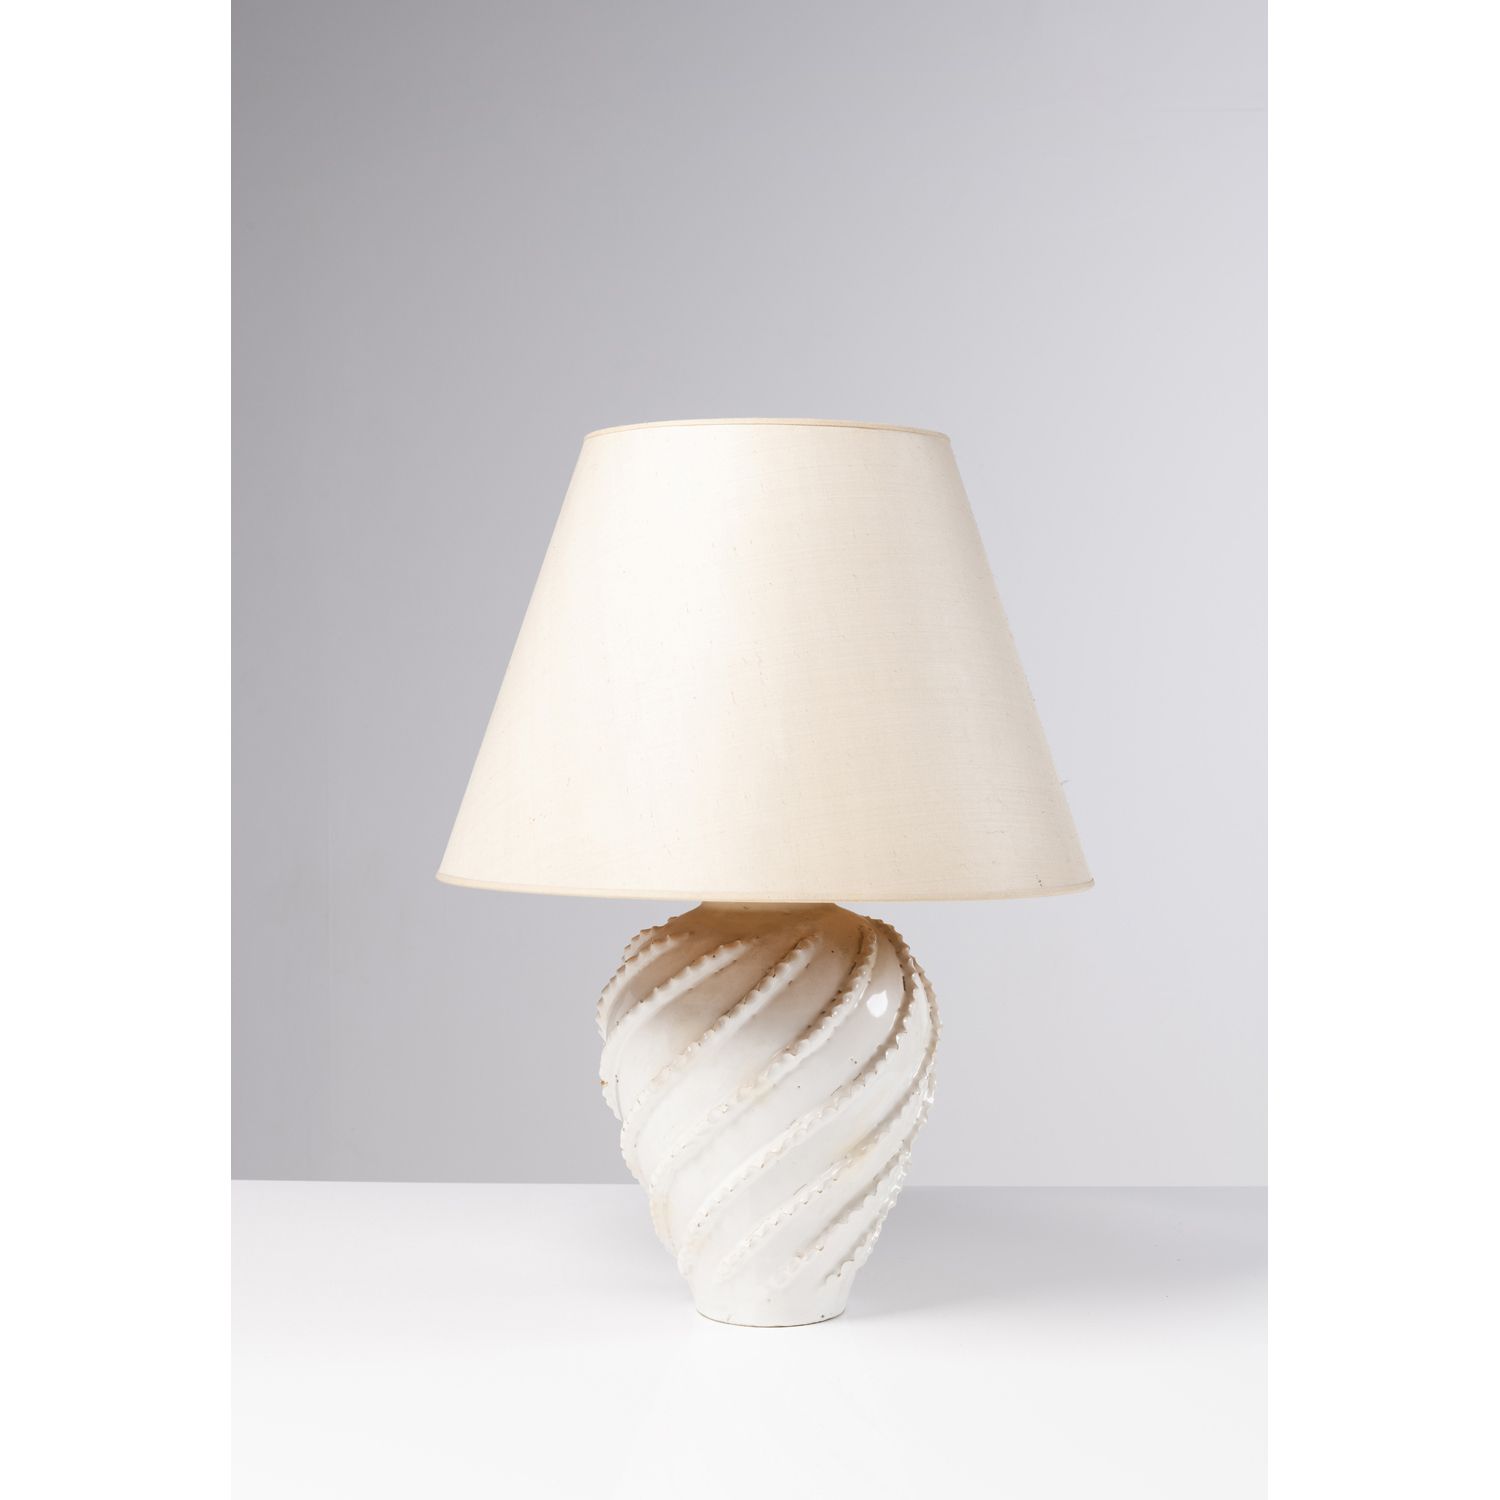 Null 法国作品（20世纪

台灯，约1950年

釉面陶瓷和纺织品

高61 × 直径46厘米